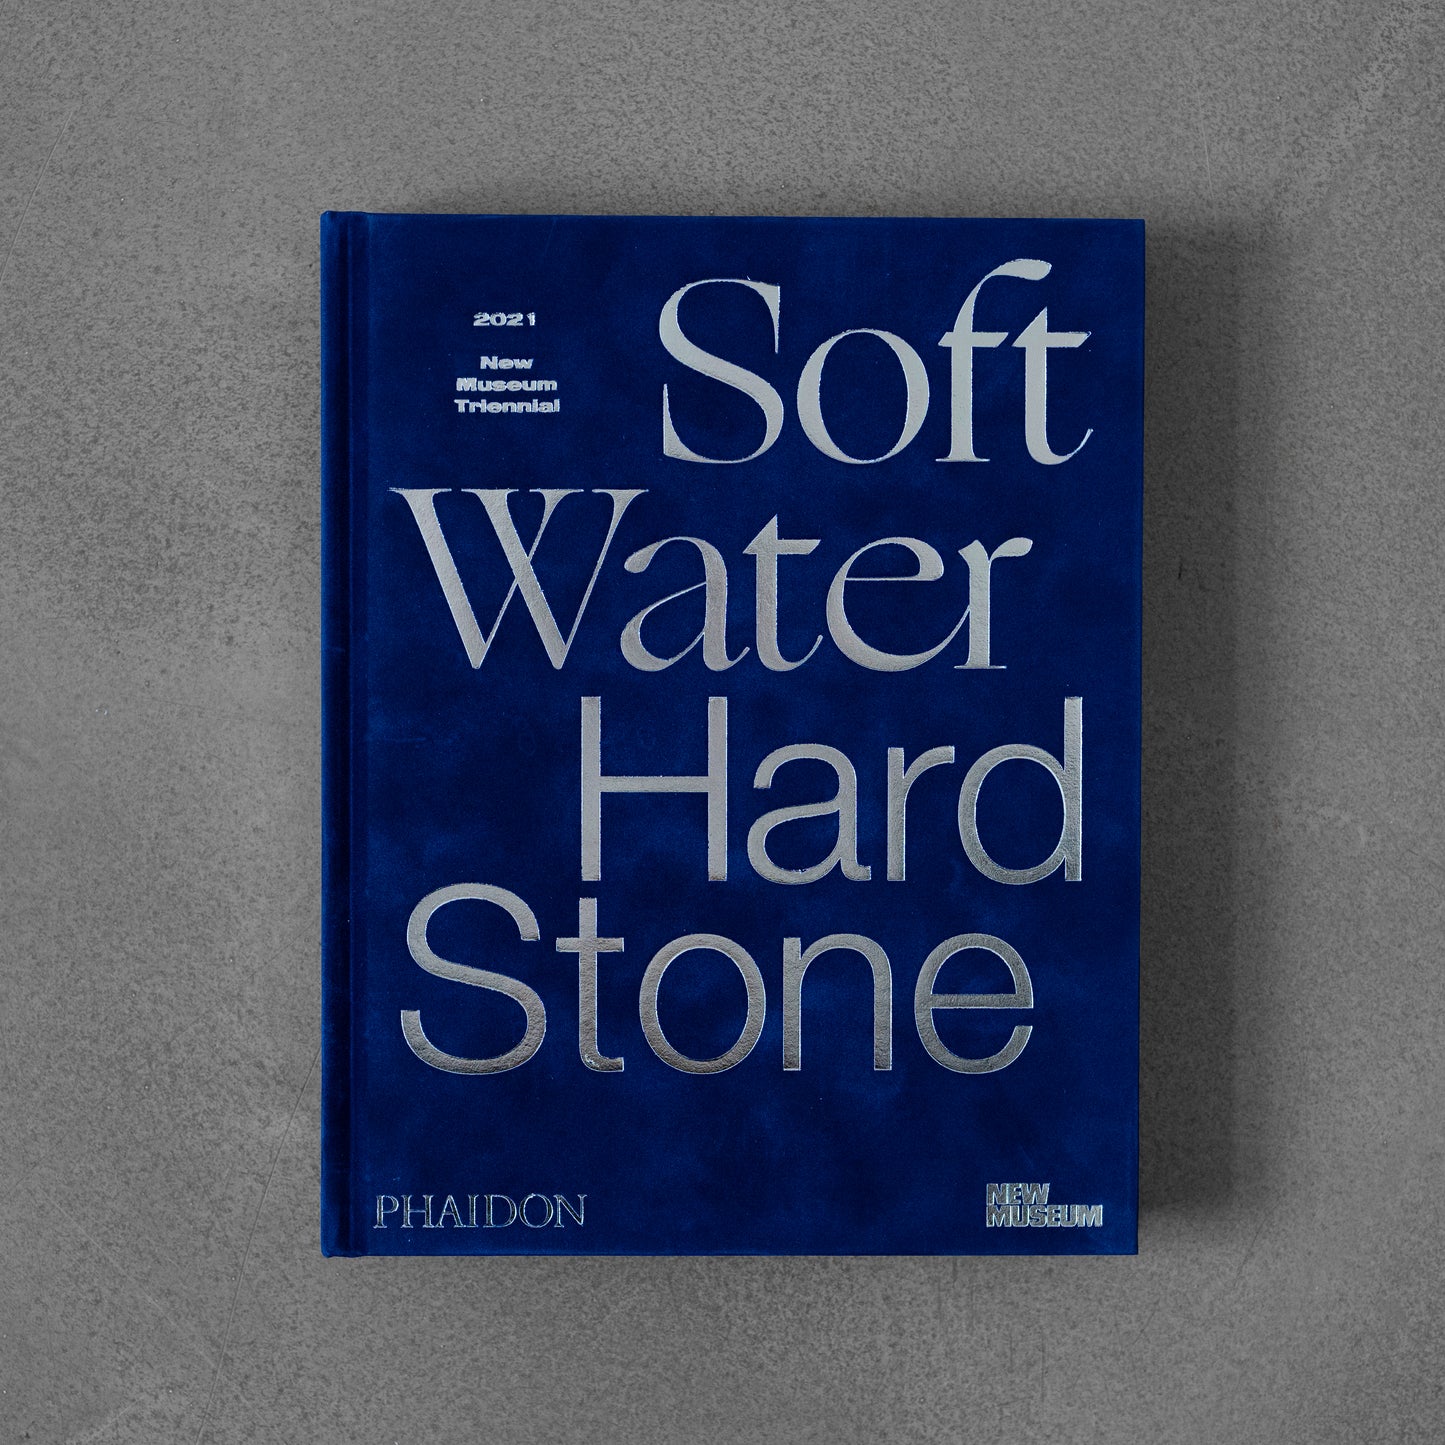 Soft Water Hard Stone: 2021 New Museum Triennial